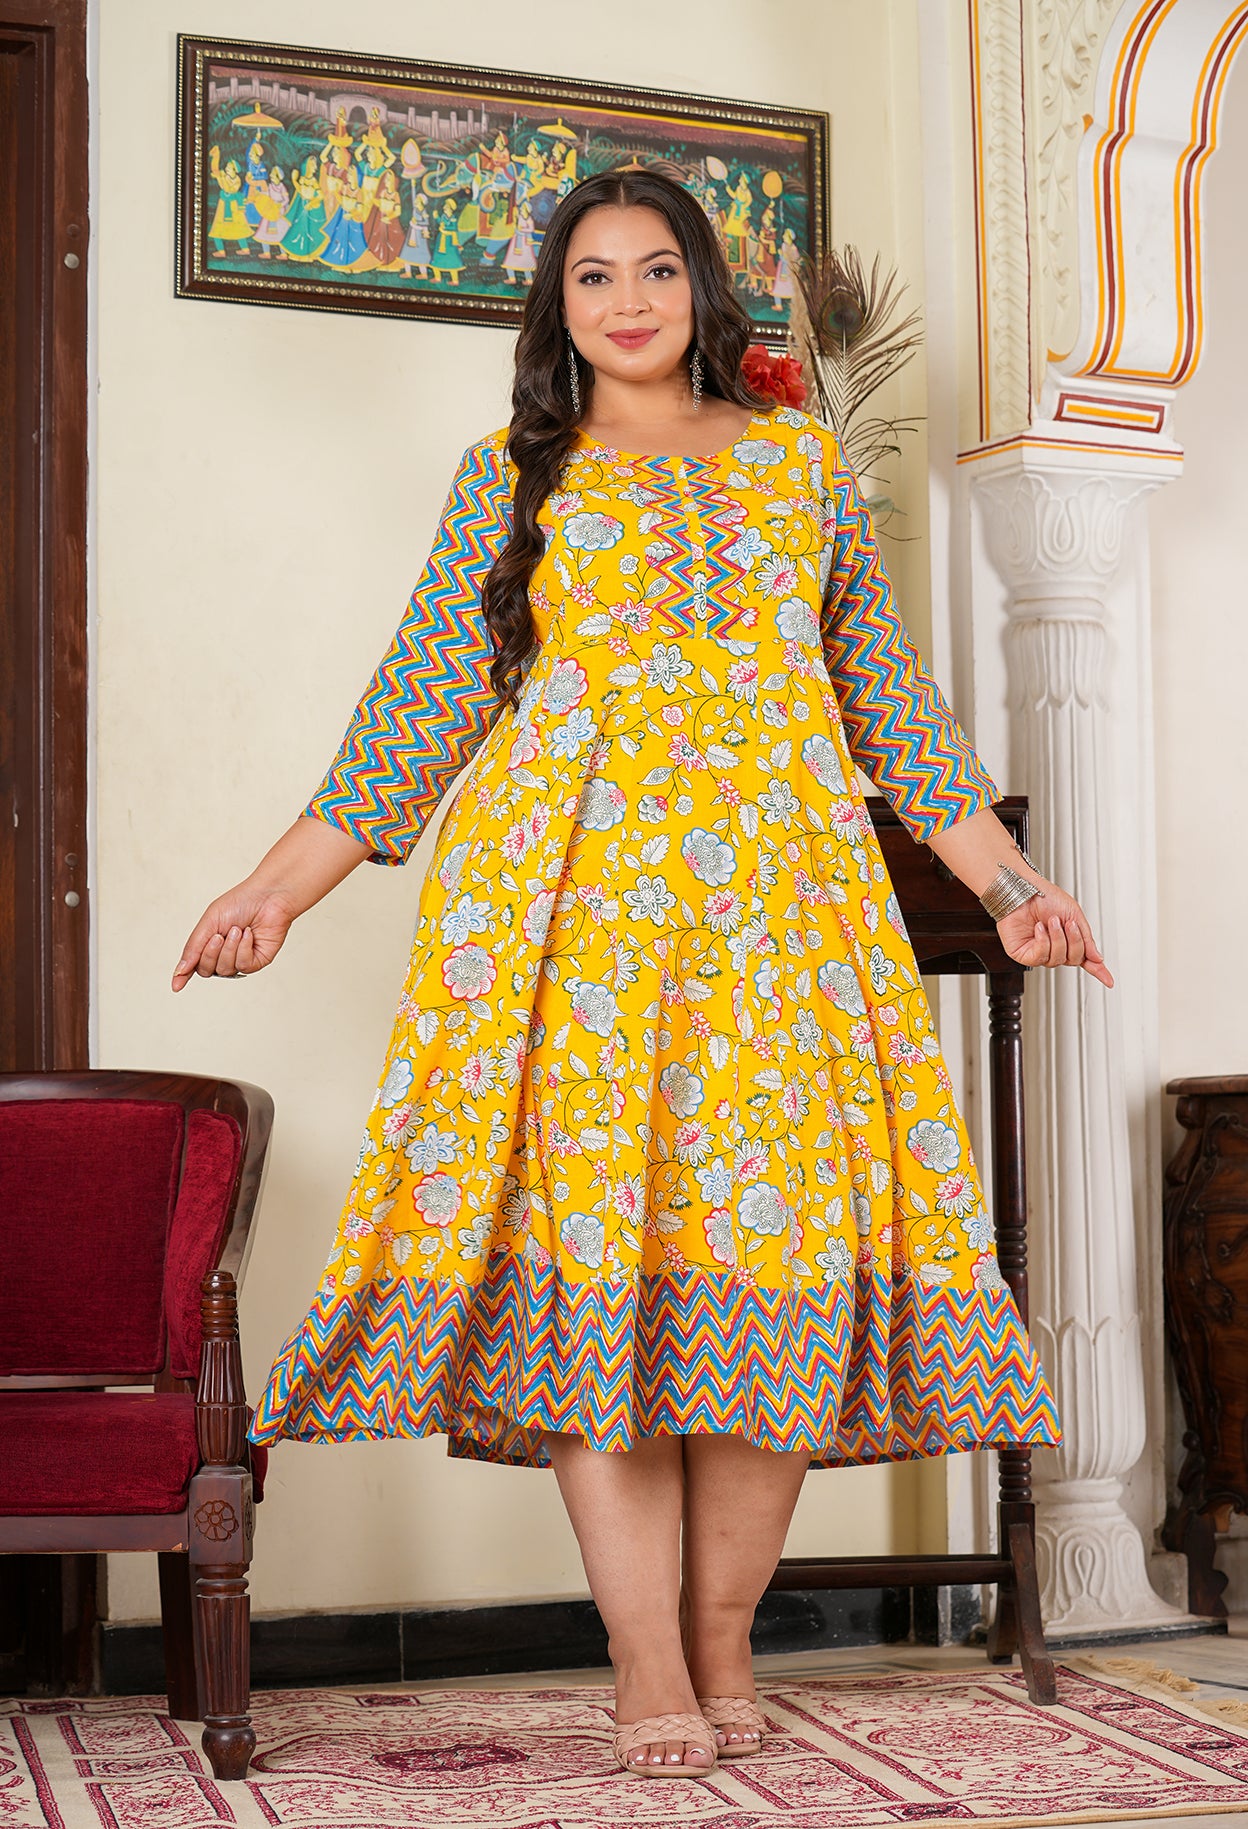 YASH GALLERY Women's Maternity Wear Floral Printed Anarkali Dress (Yellow)